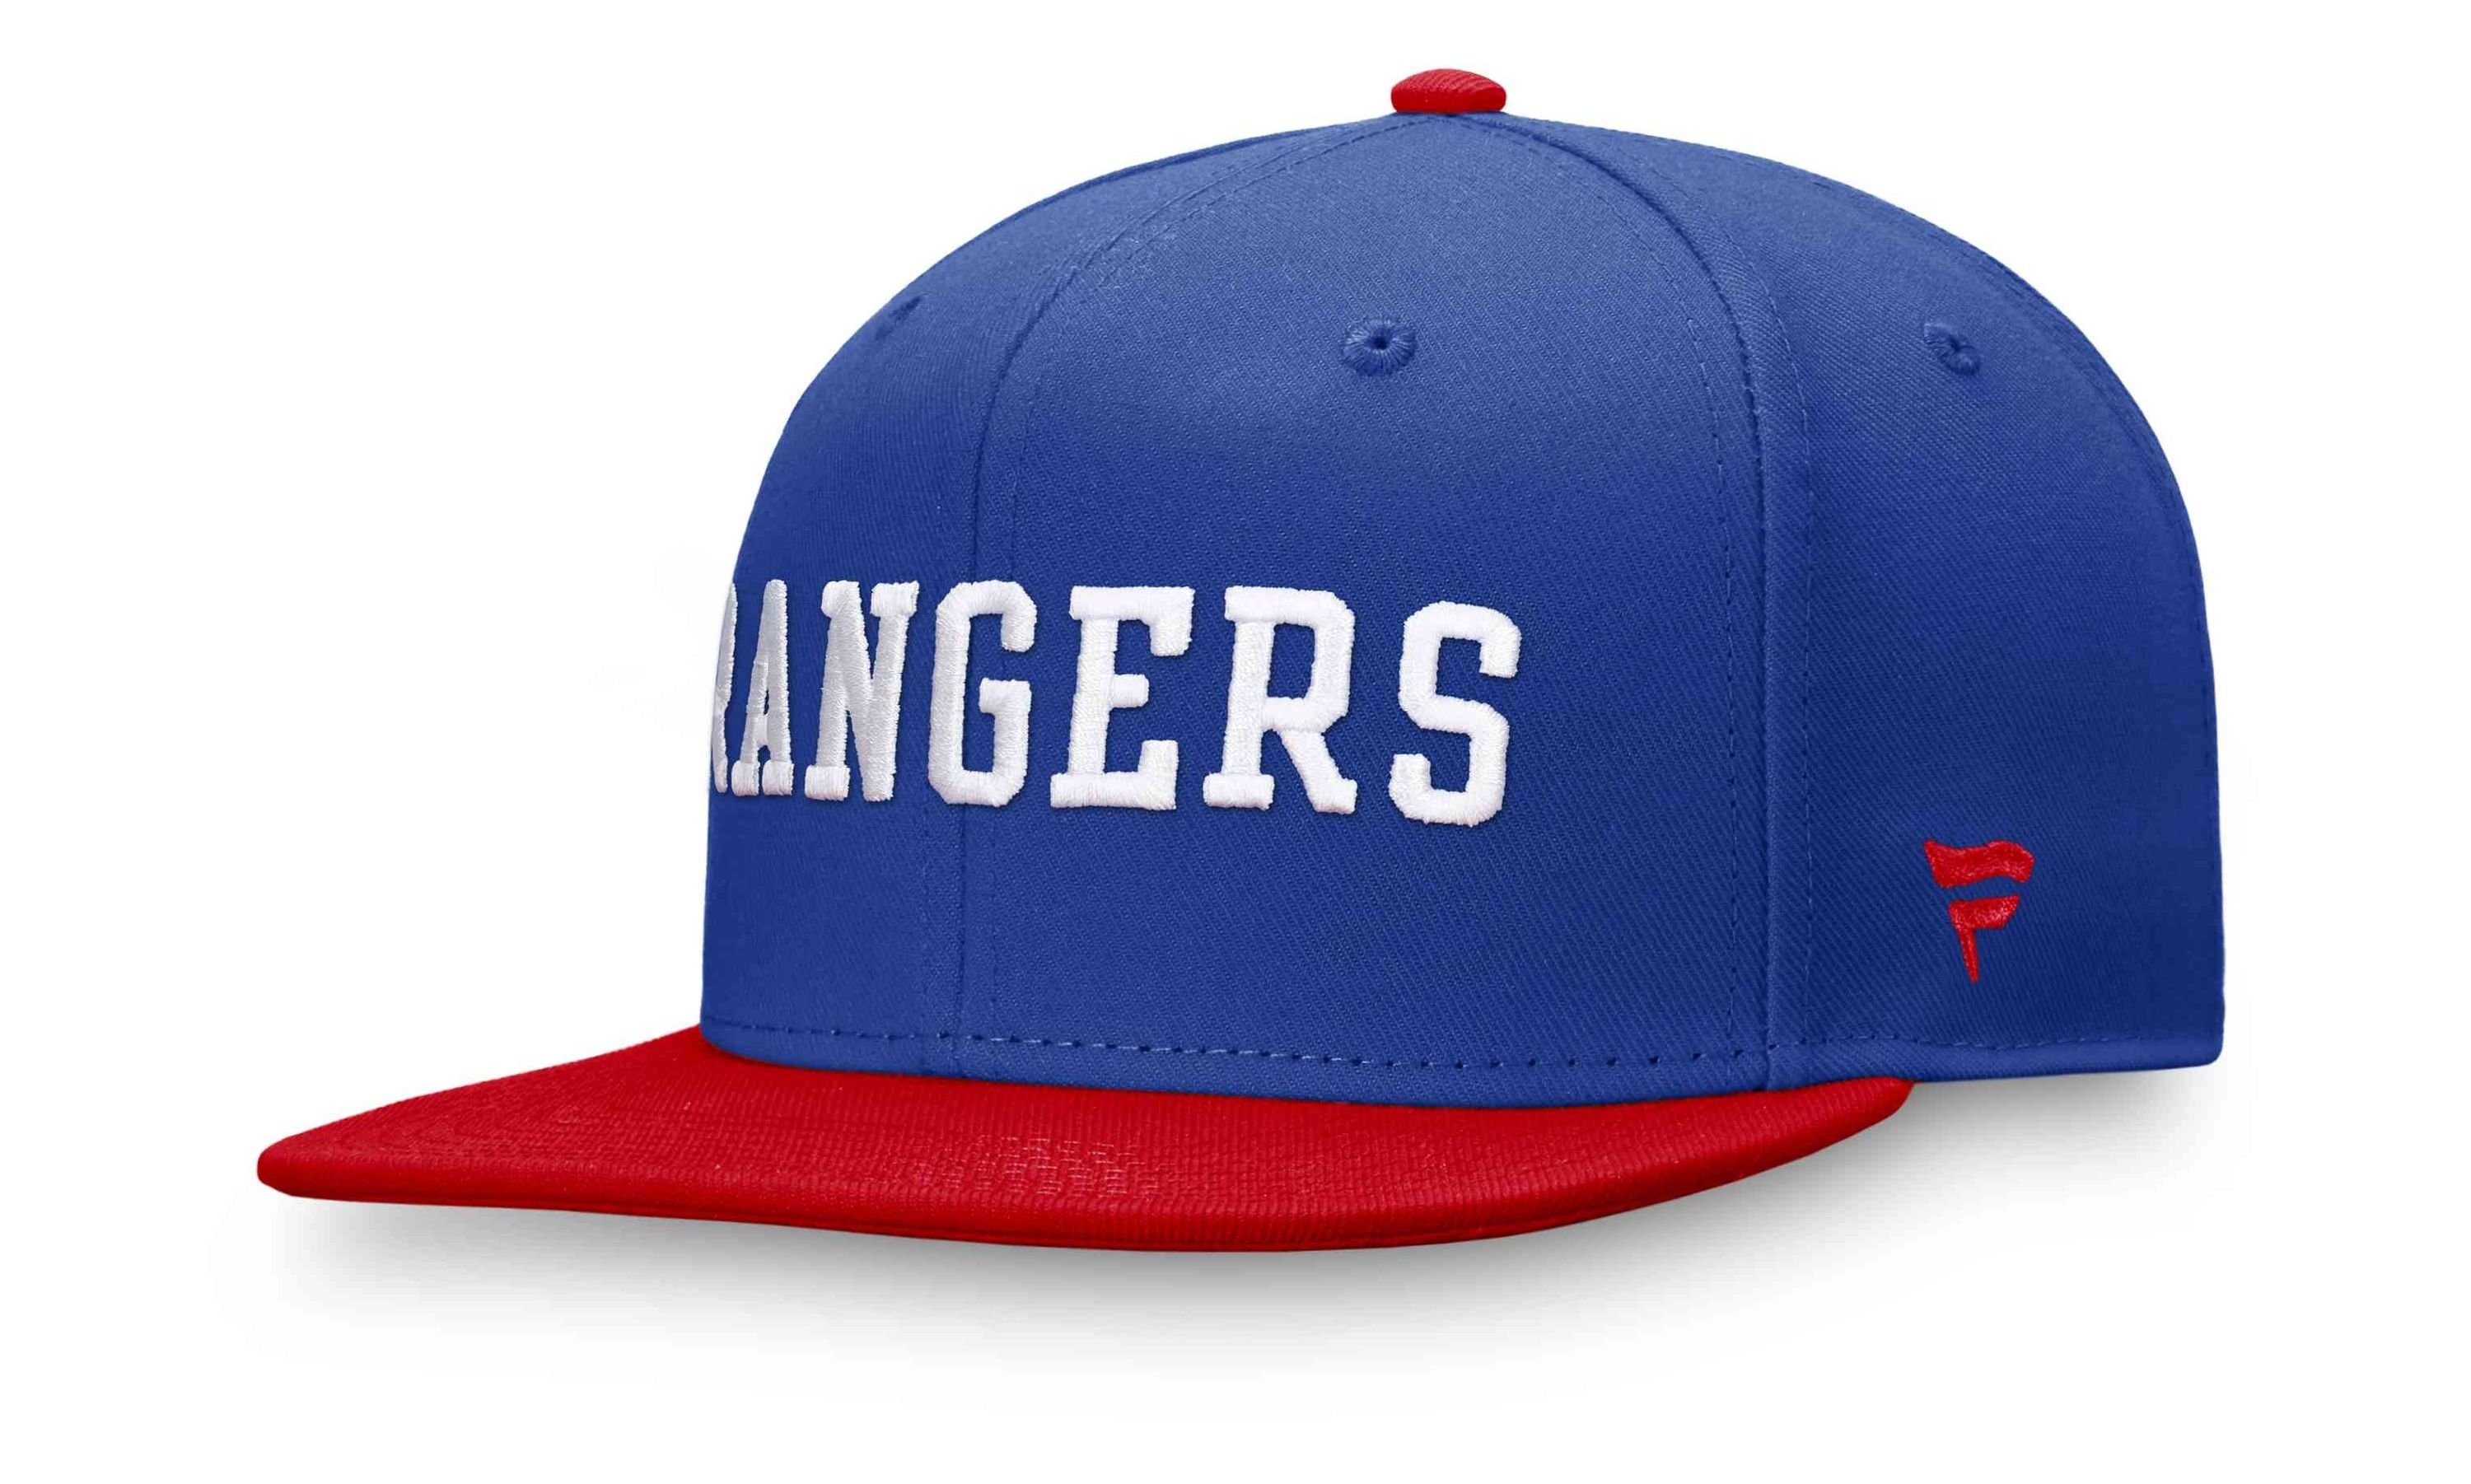 NHL Iconic Cap Blocked Snapback New Color Fanatics York Rangers